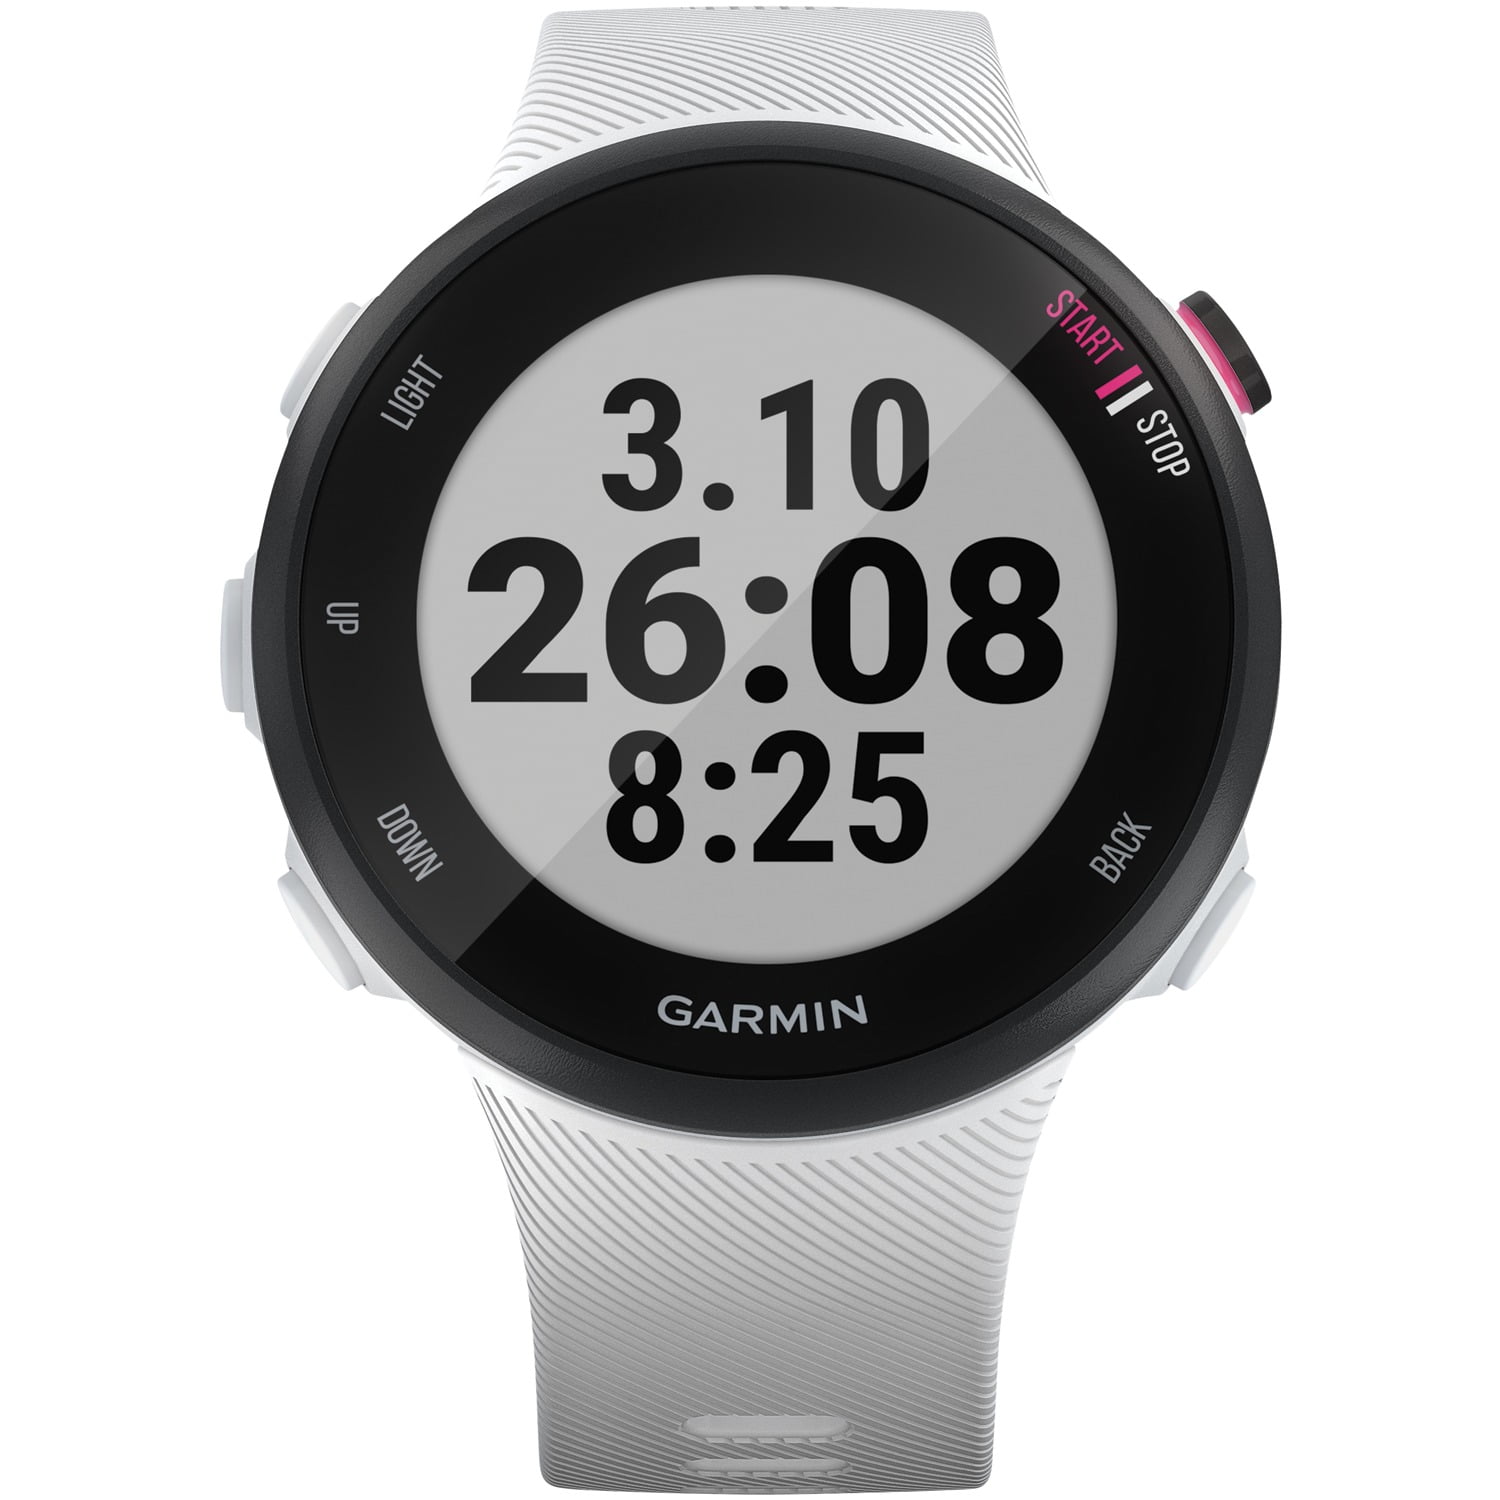 Garmin Forerunner 45S GPS Running Watch with Coach Training Plan Support -  Small